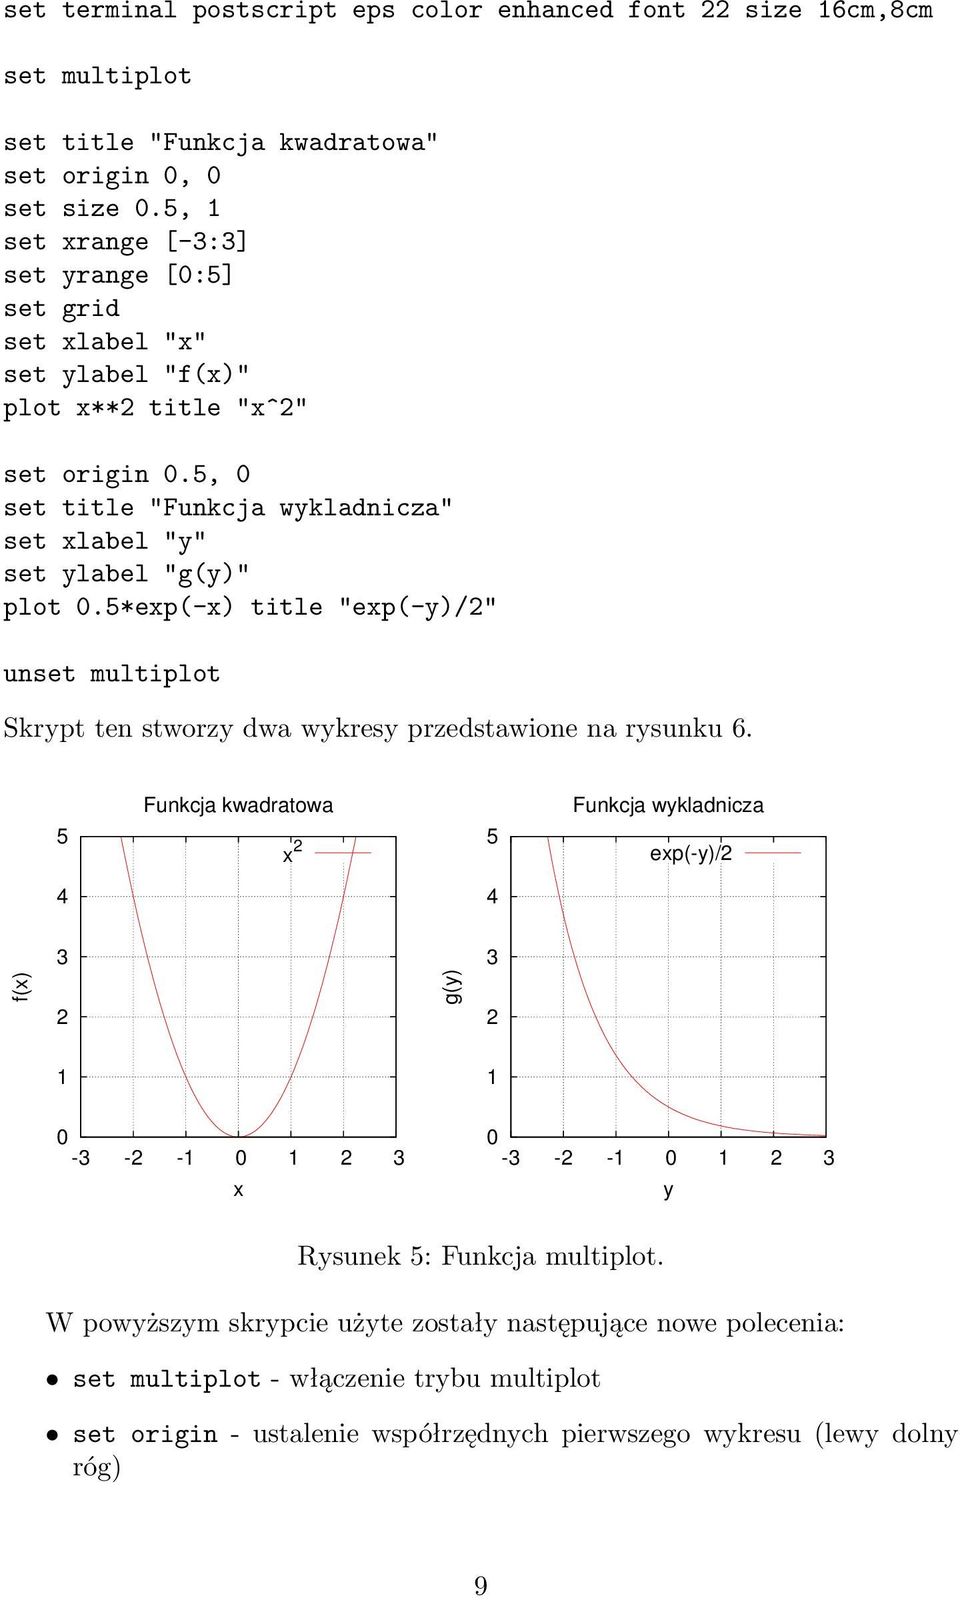 5, 0 set title "Funkcja wykladnicza" set xlabel "y" set ylabel "g(y)" plot 0.5*exp(-x) title "exp(-y)/2" unset multiplot Skrypt ten stworzy dwa wykresy przedstawione na rysunku 6.